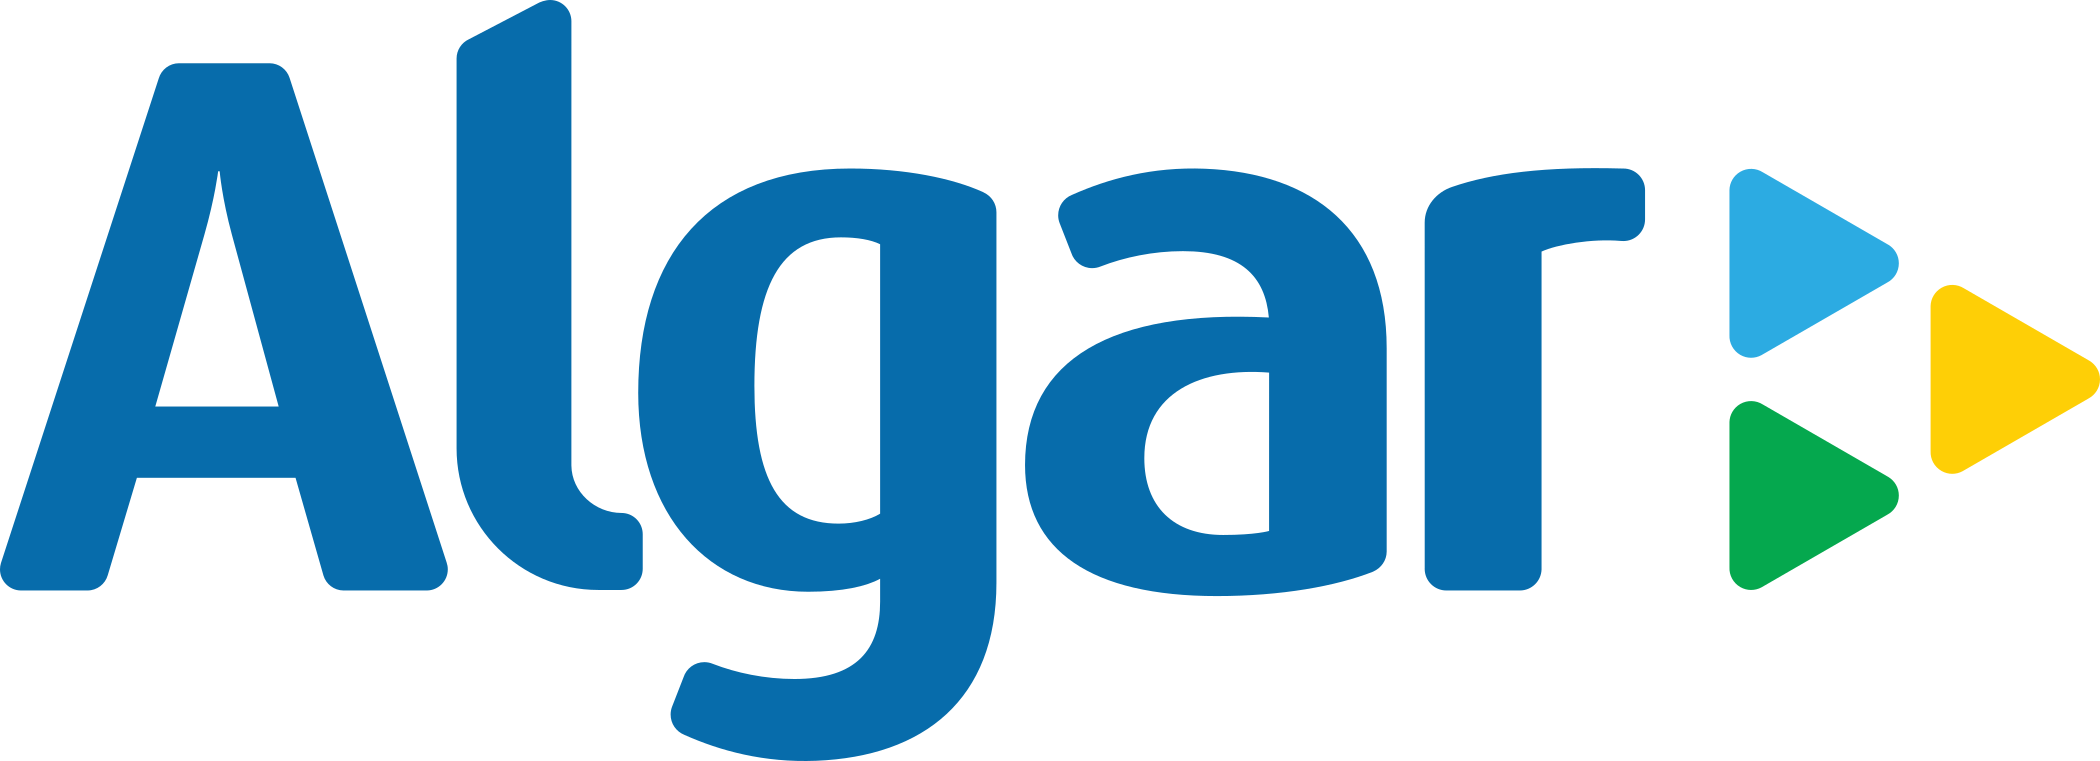 Algar Logo - PNG e Vetor - Download de Logo